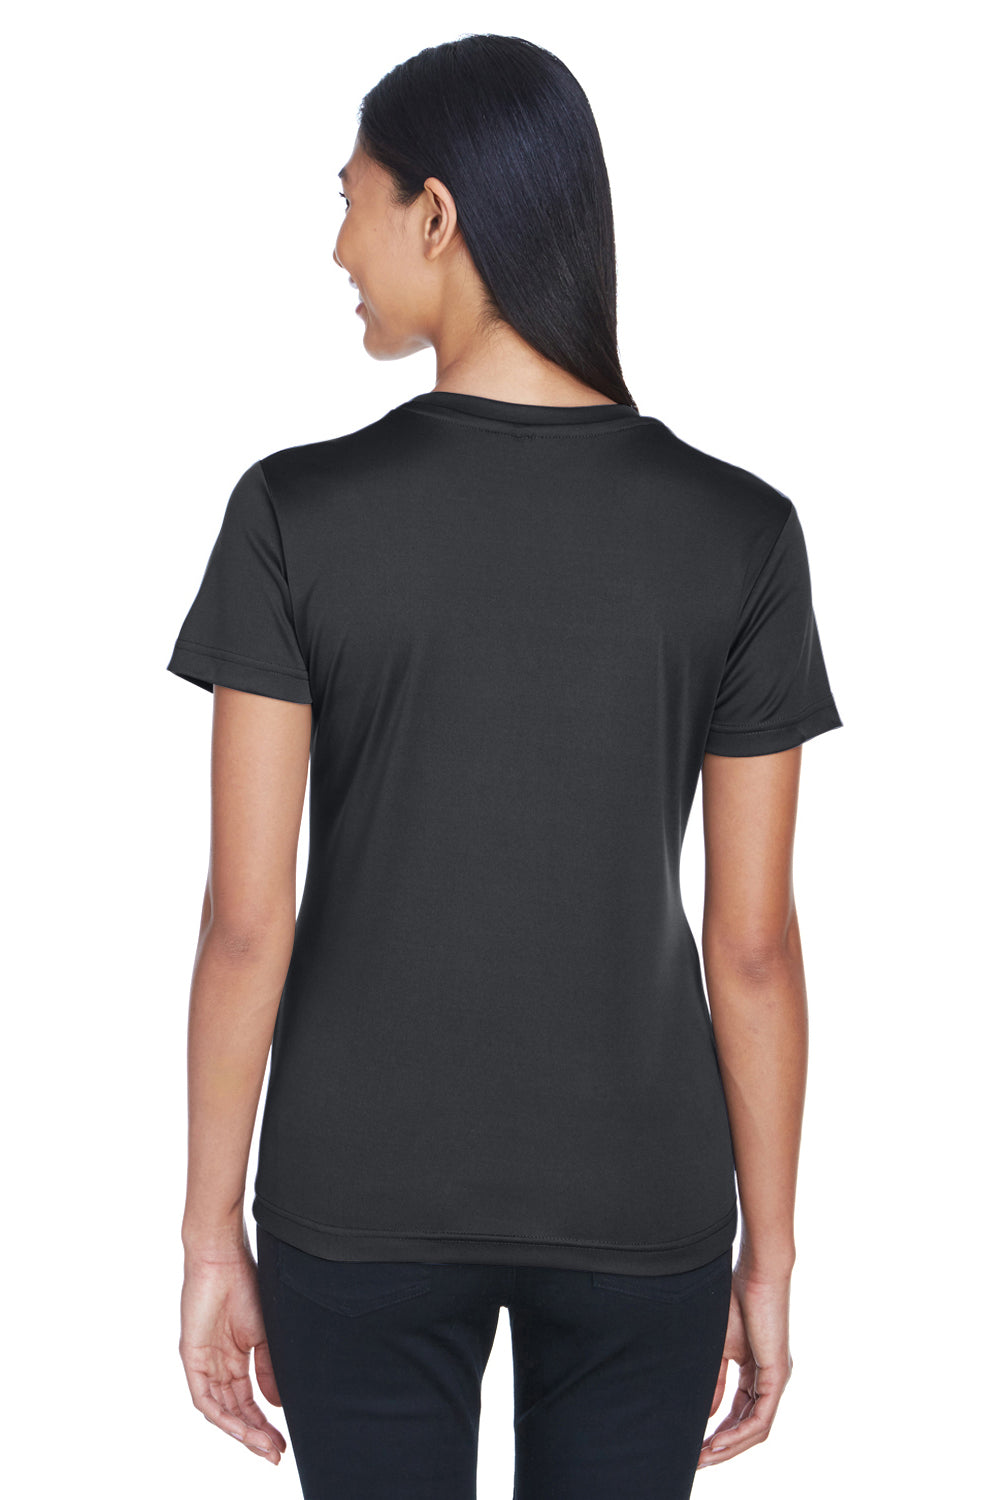 UltraClub 8620L Womens Cool & Dry Performance Moisture Wicking Short Sleeve Crewneck T-Shirt Black Back